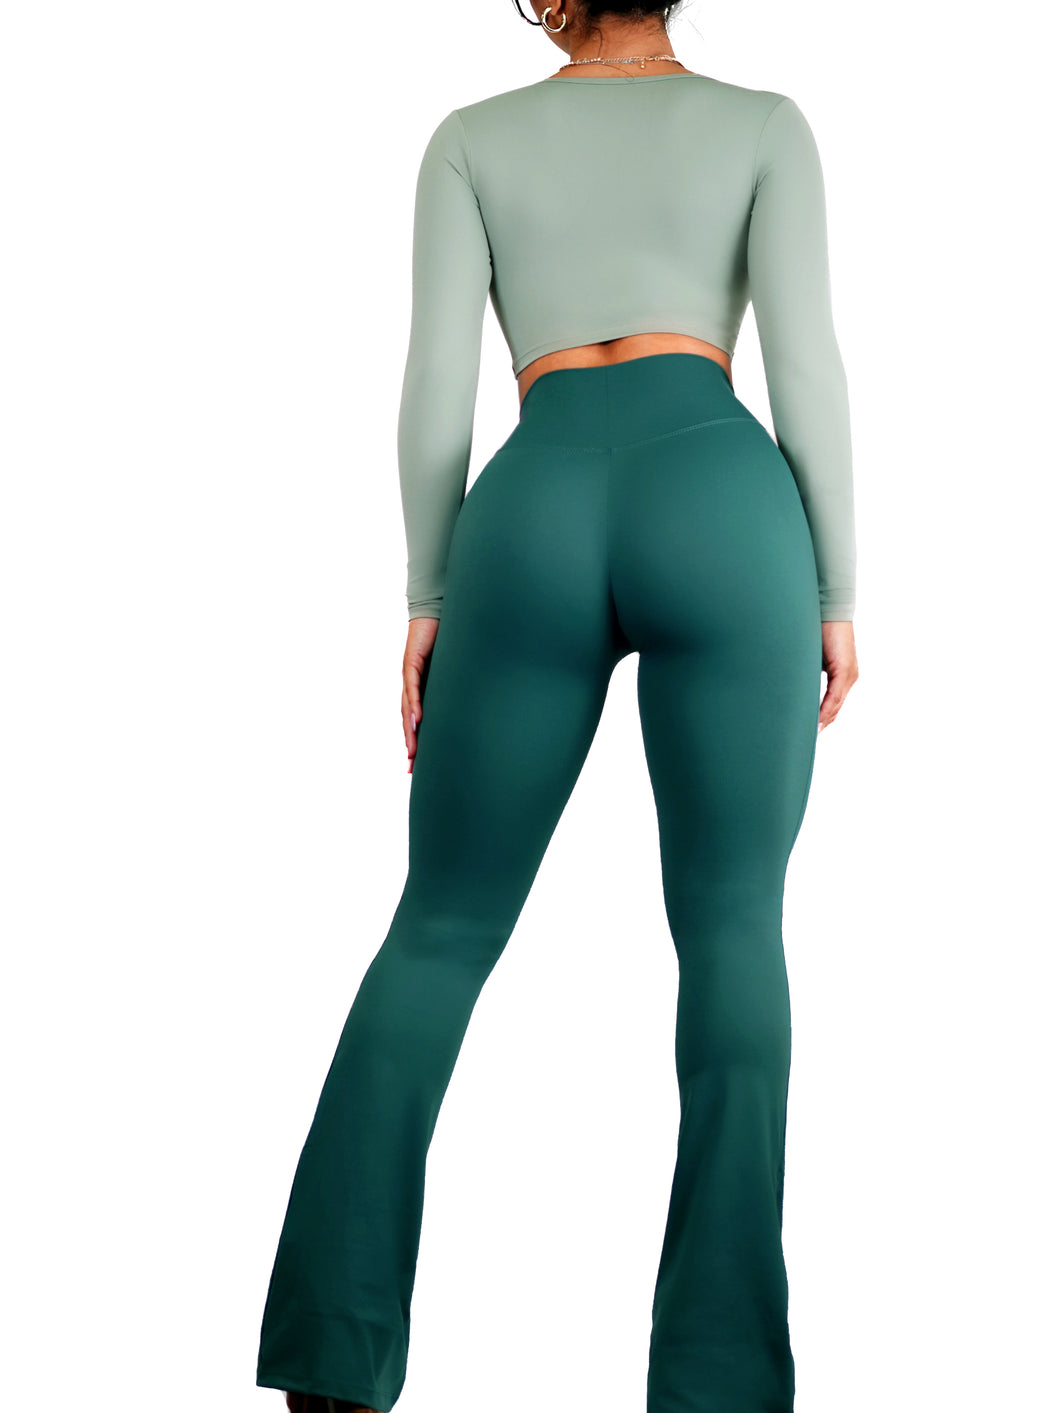 Bootcut Flare Seamless Leggings (Jade) – Fitness Fashioness